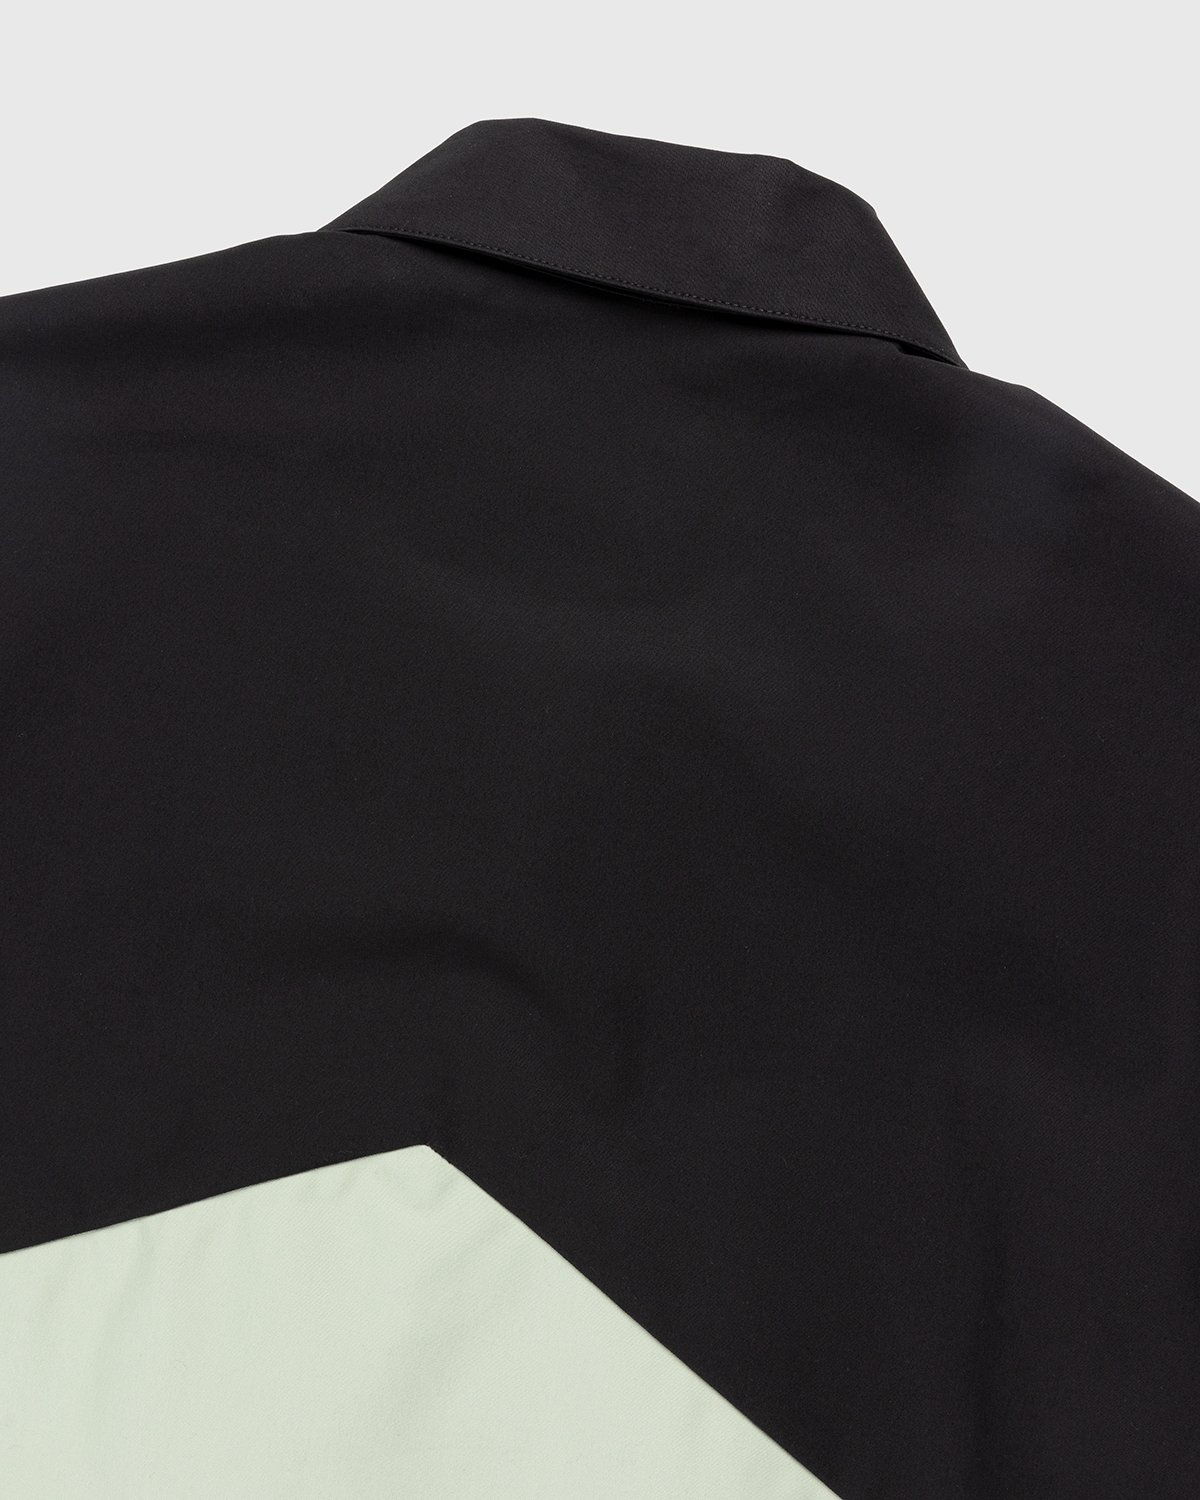 Jil Sander - Two-Tone Diagonal Cut Shirt Black/Green - Clothing - Green - Image 3